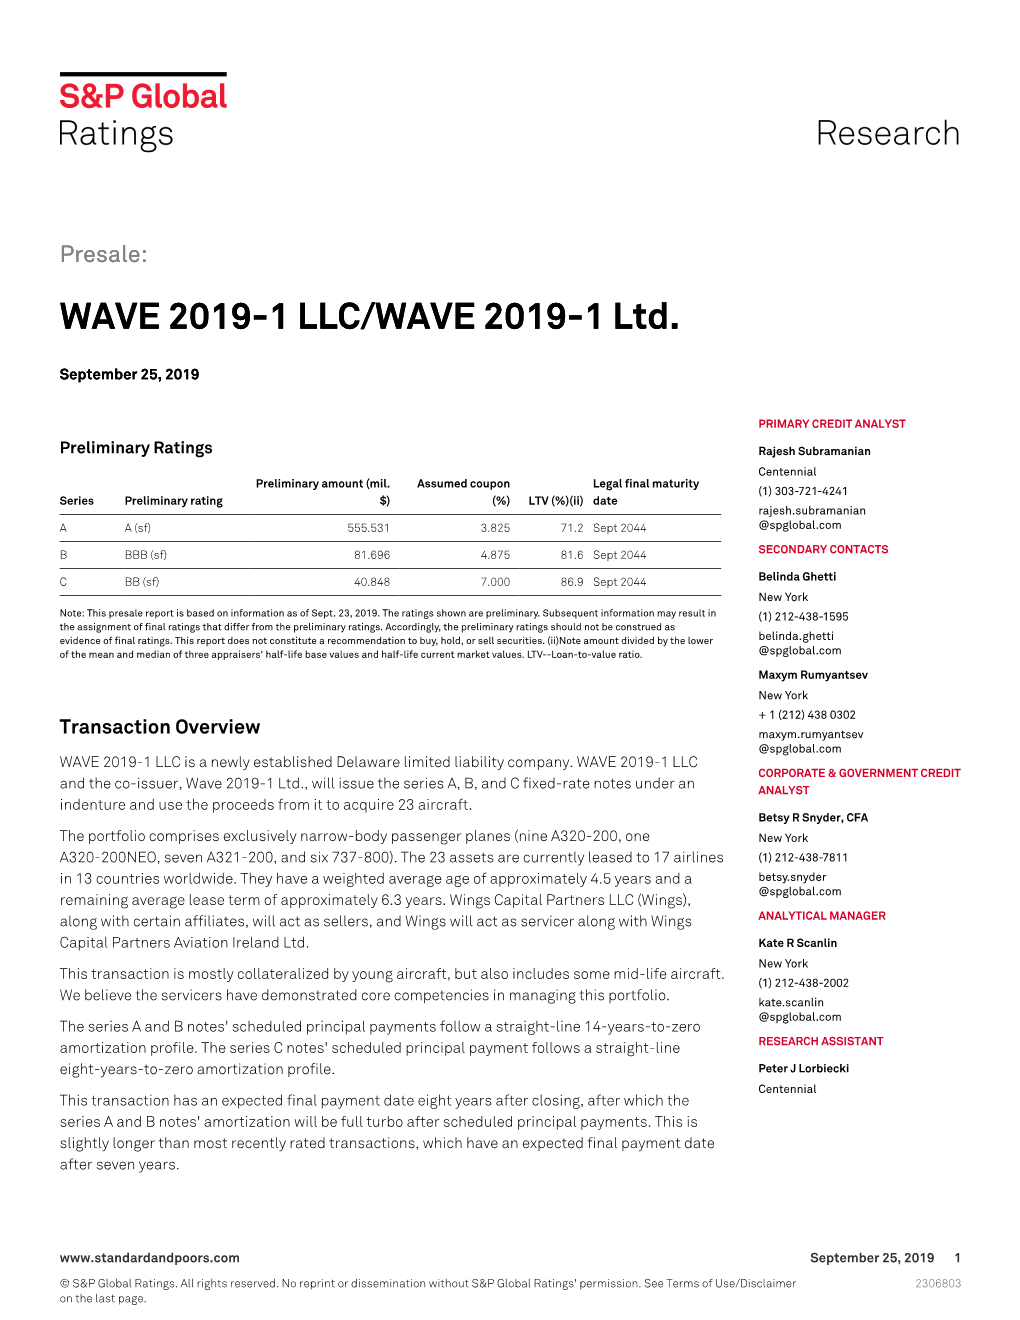 WAVE 2019-1 LLC/WAVE 2019-1 Ltd